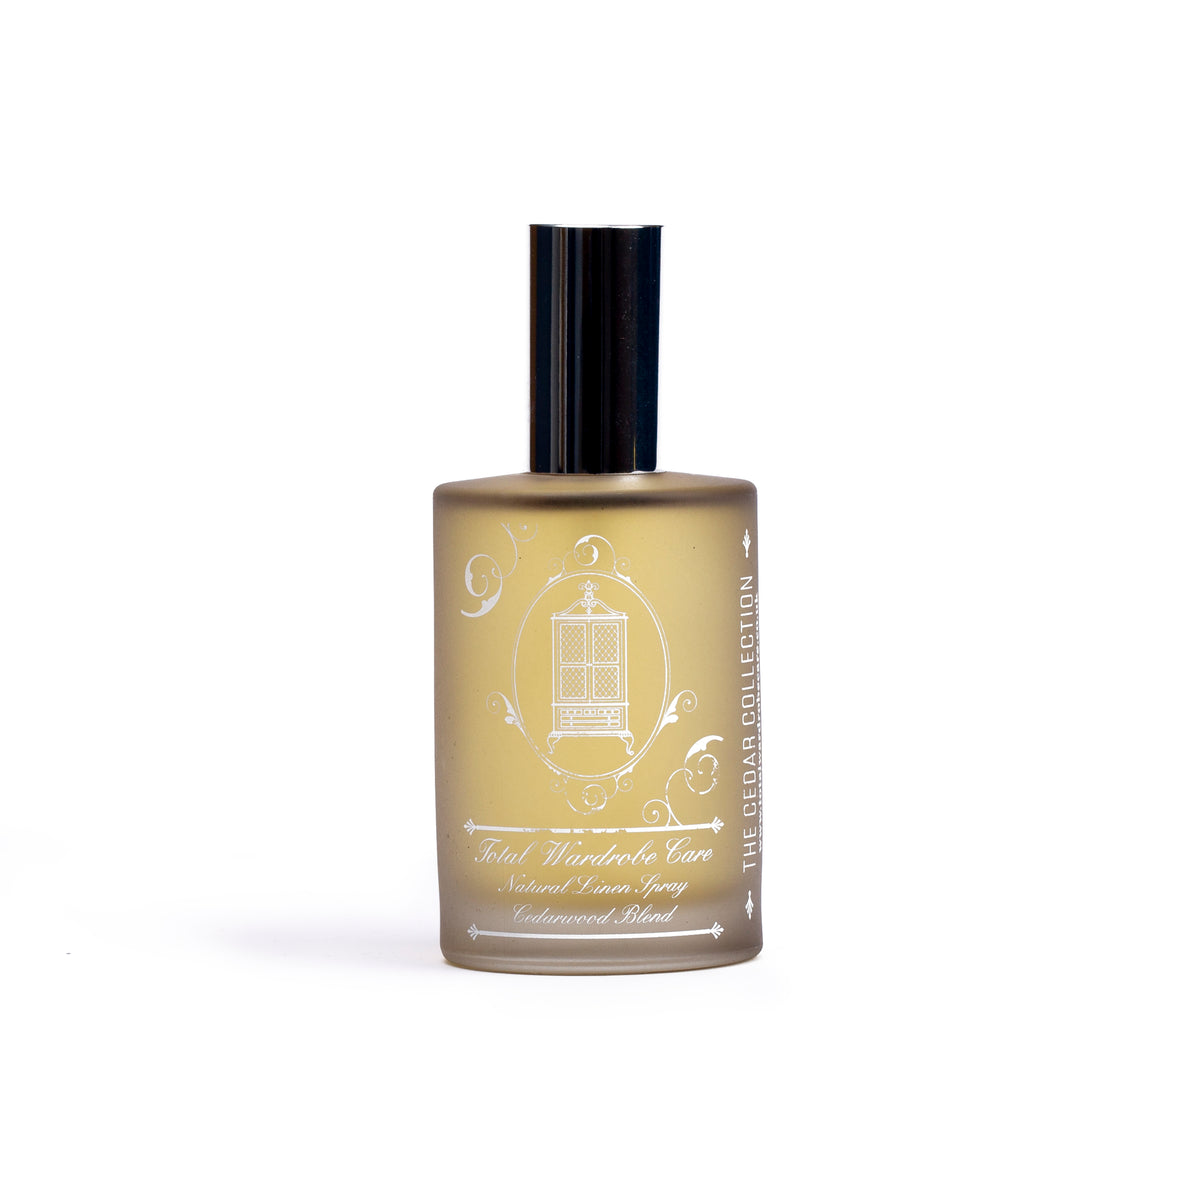 Cedar collection linen spray on white background in golden bottle